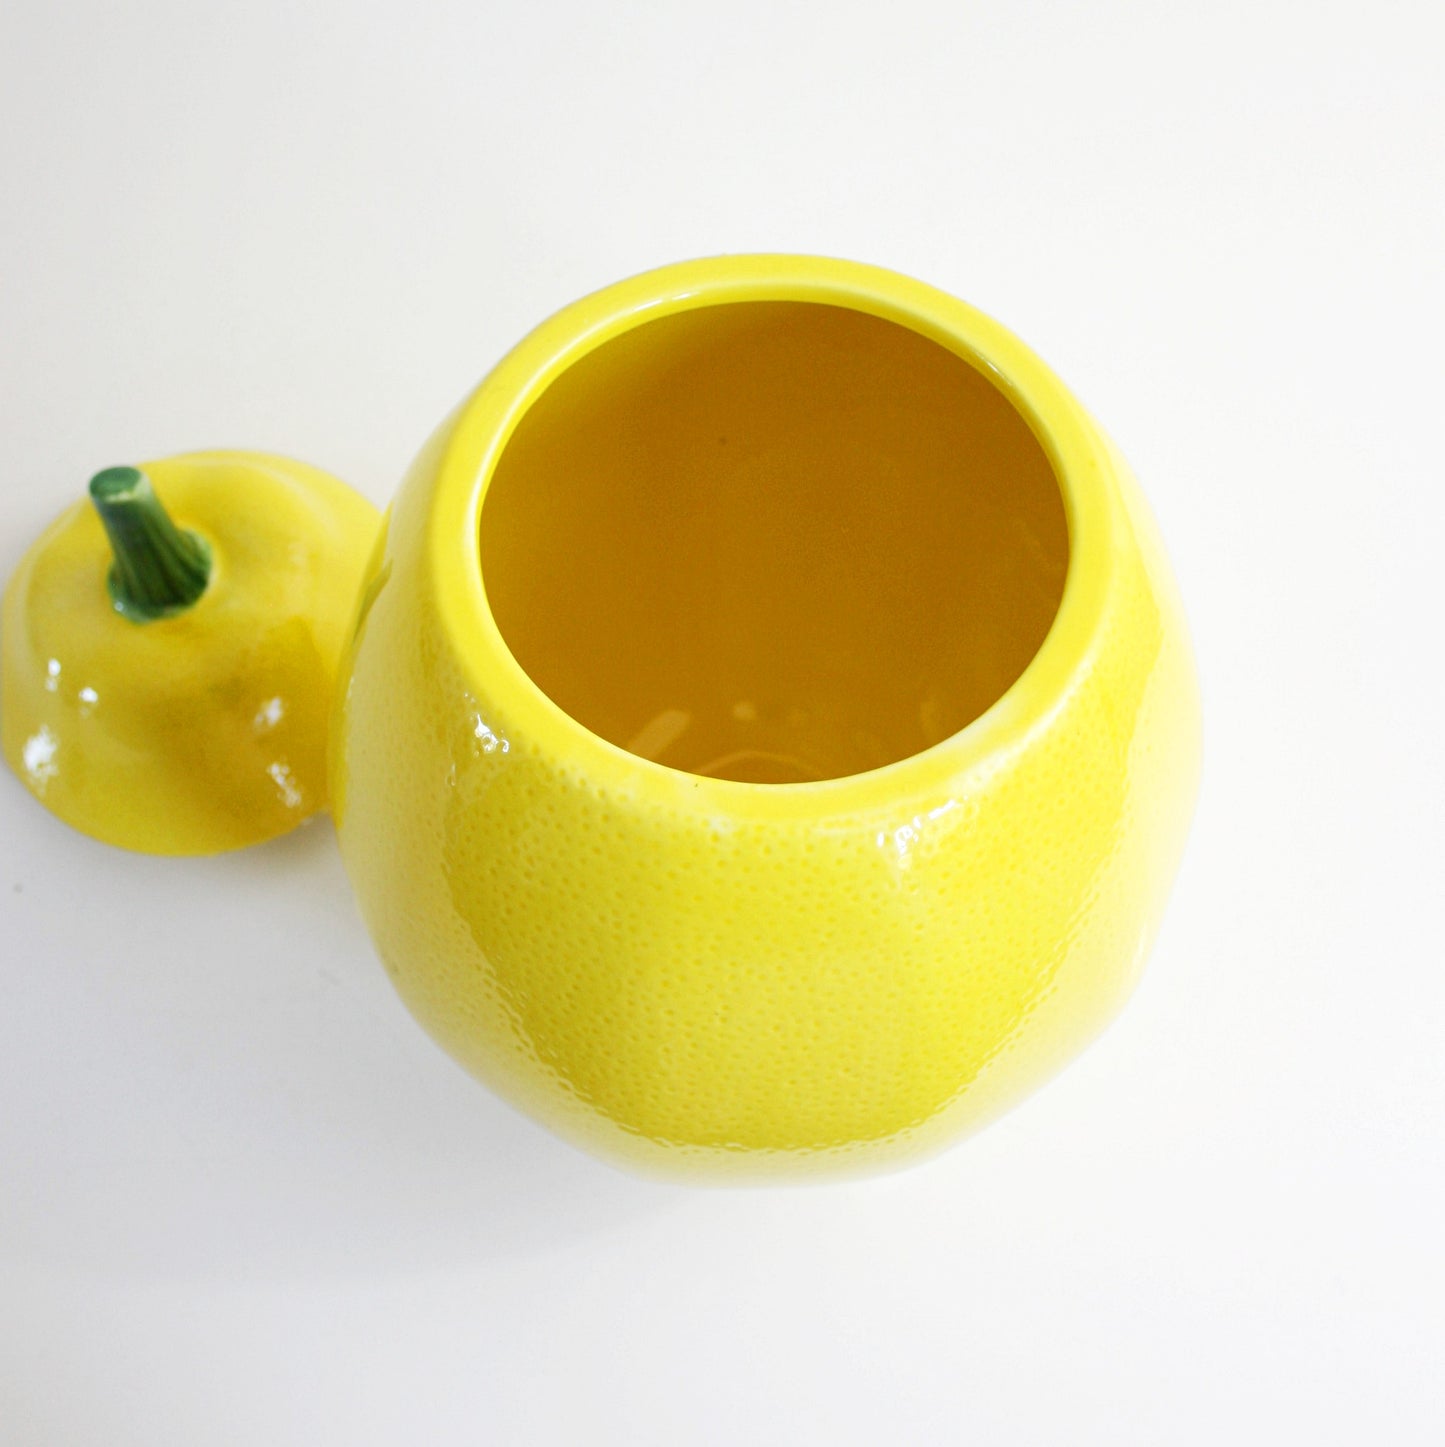 SOLD - Vintage Ceramic Lemon Cookie Jar / Mid Century Yellow Lemon Fruit Canister